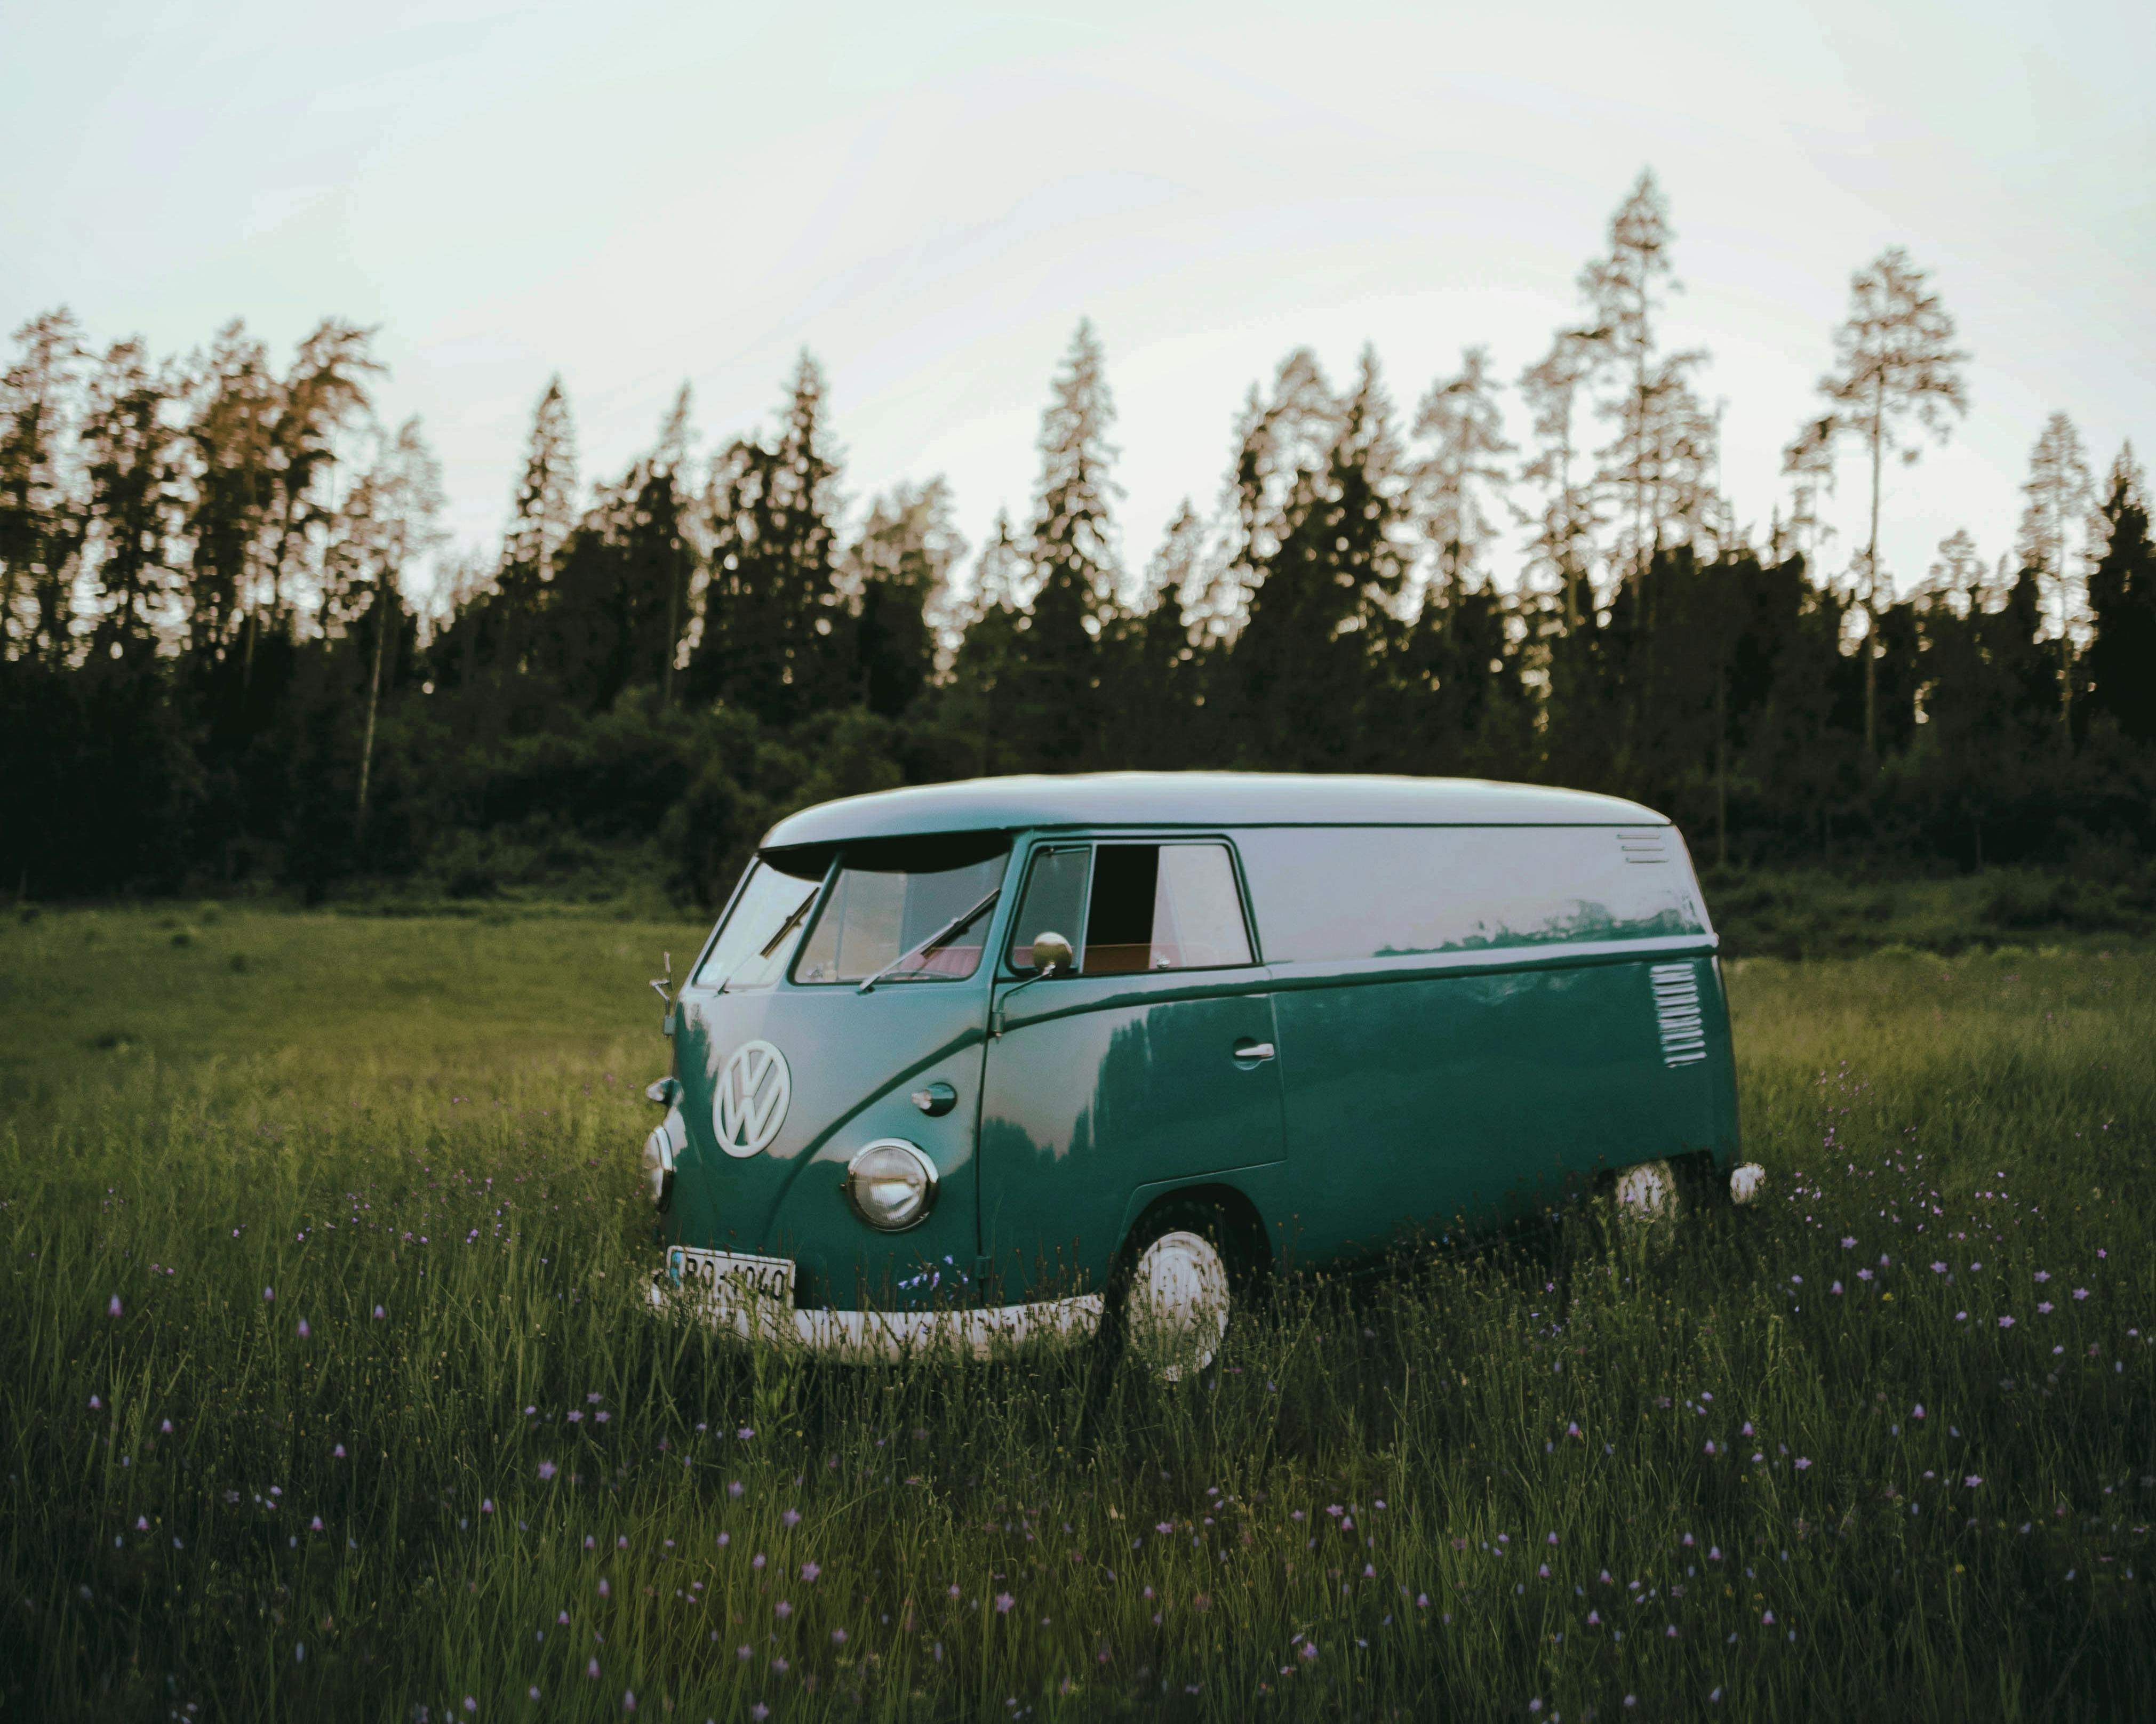 A green Volkswagen campervan in a grassy field